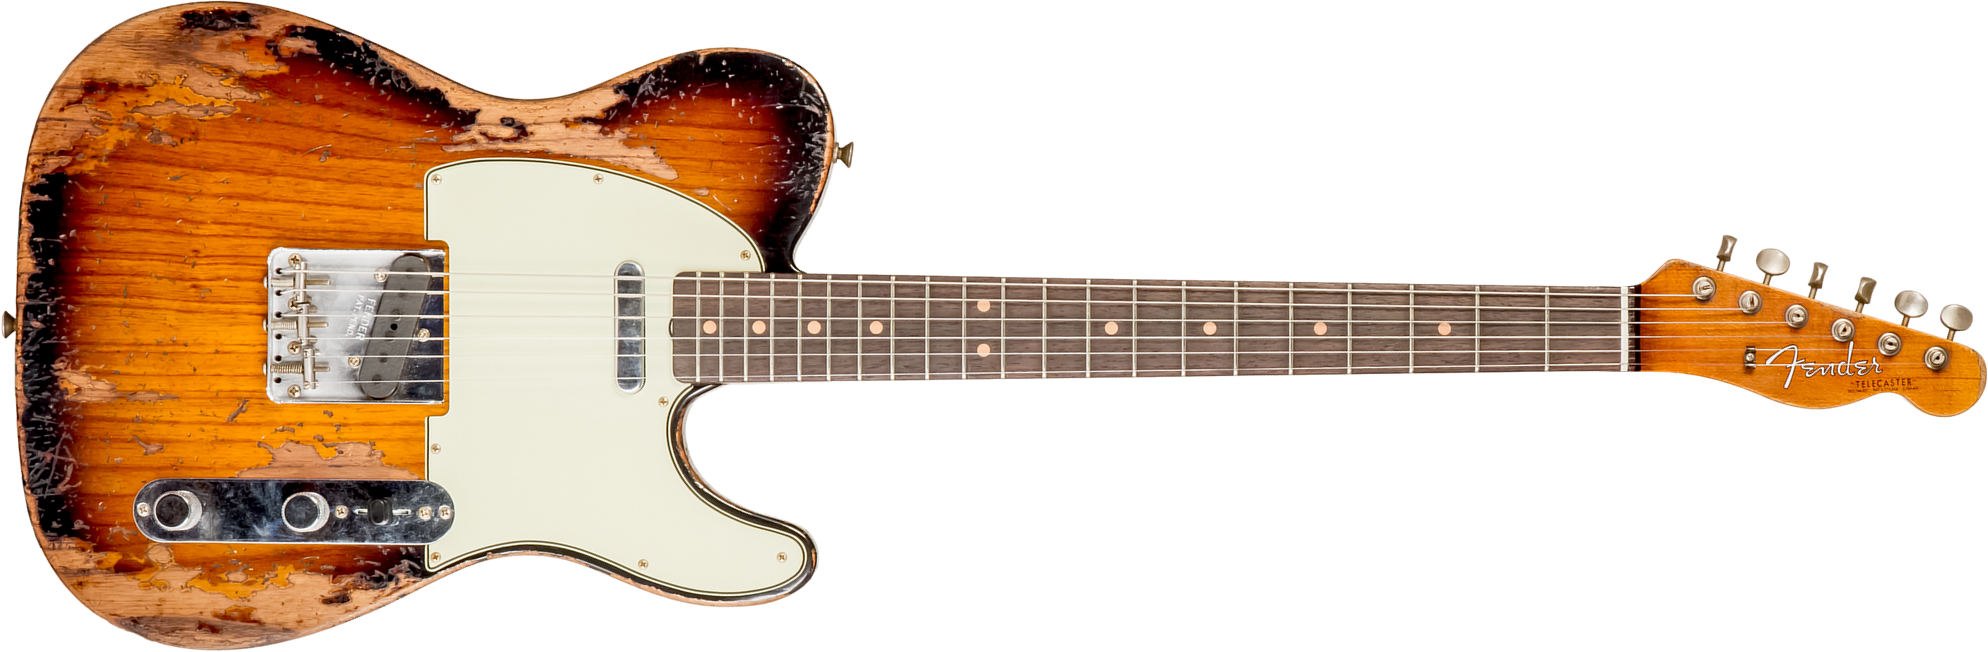 Fender Custom Shop Tele 1963 2s Ht Rw #r136206 - Super Heavy Relic 2-color Sunburst - Guitarra eléctrica con forma de tel - Main picture